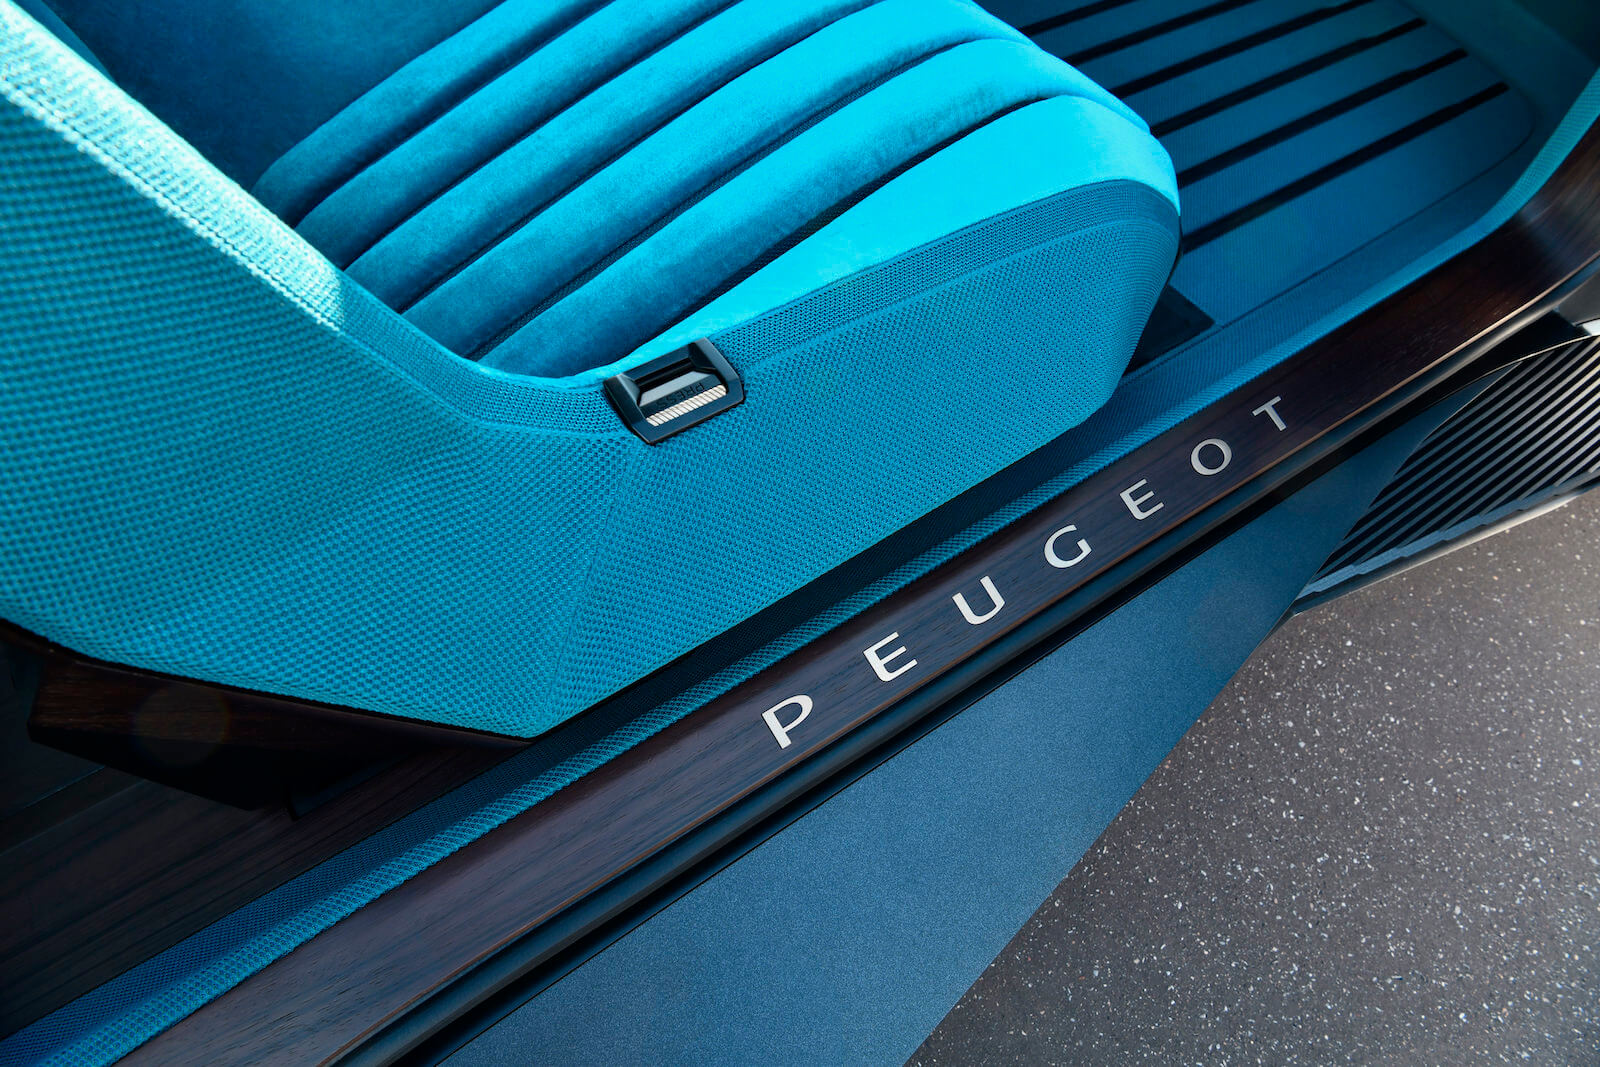 Peugeot e-LEGEND